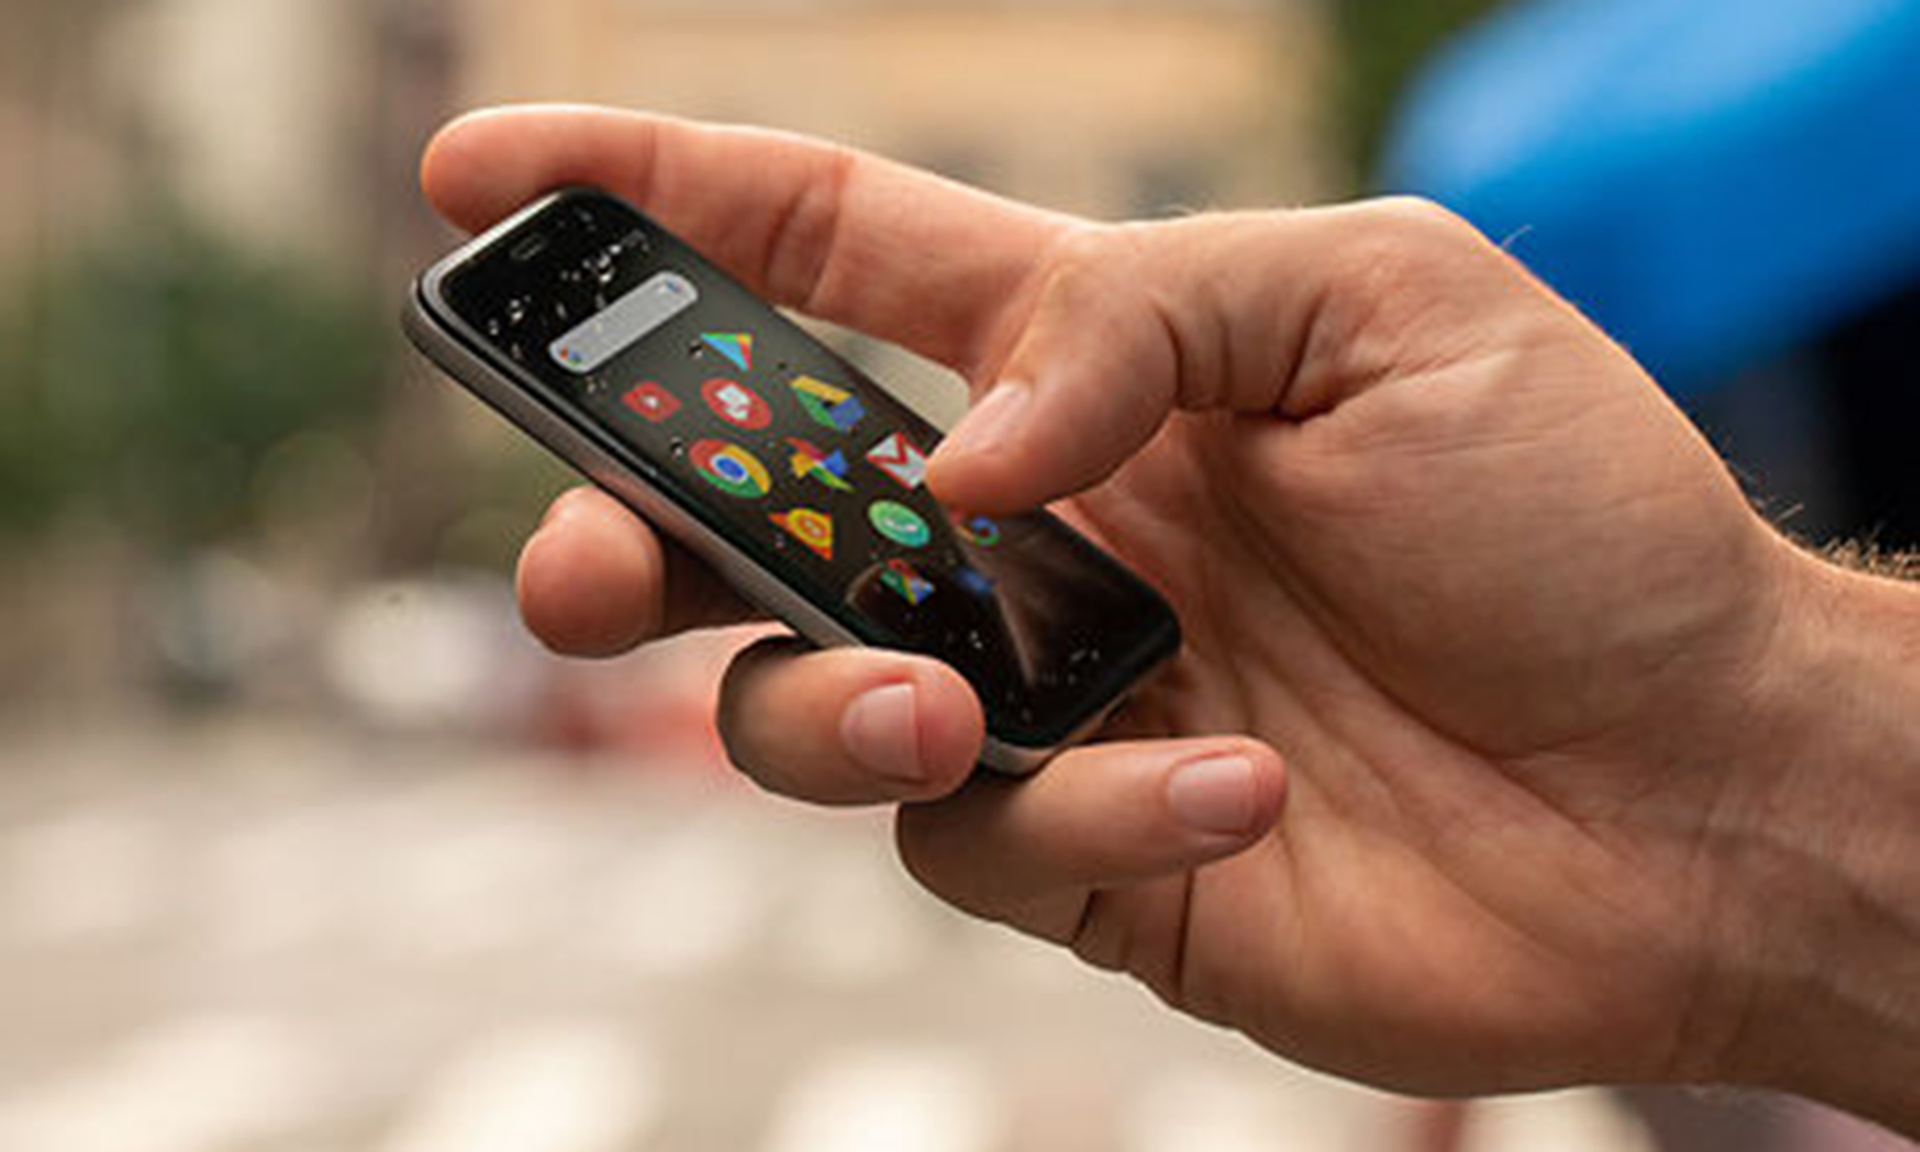 FOX、クレジットカードサイズの小型な防水・防塵対応SIMフリースマホ「Palm Phone」を4月24日に発売！予約受付開始し、価格は4万